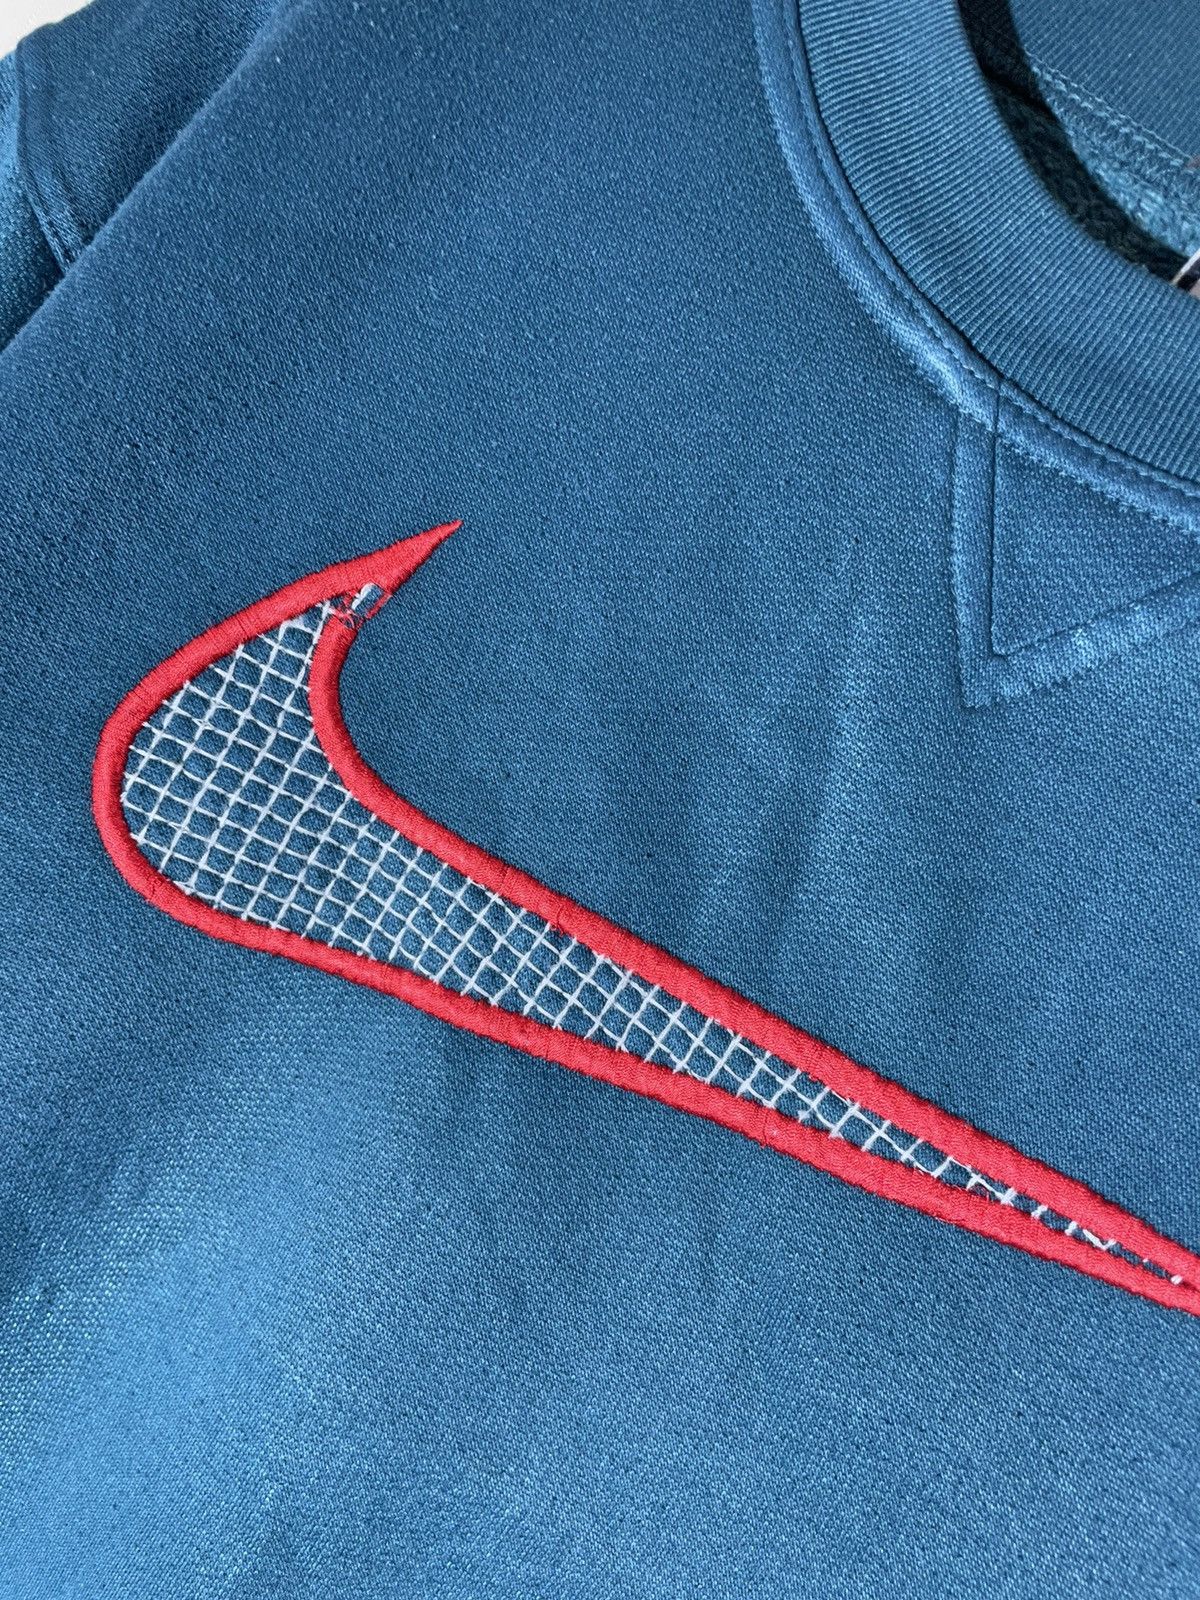 Nike Nike vintage y2k sweatshirt 80-90s Size US M / EU 48-50 / 2 - 8 Thumbnail